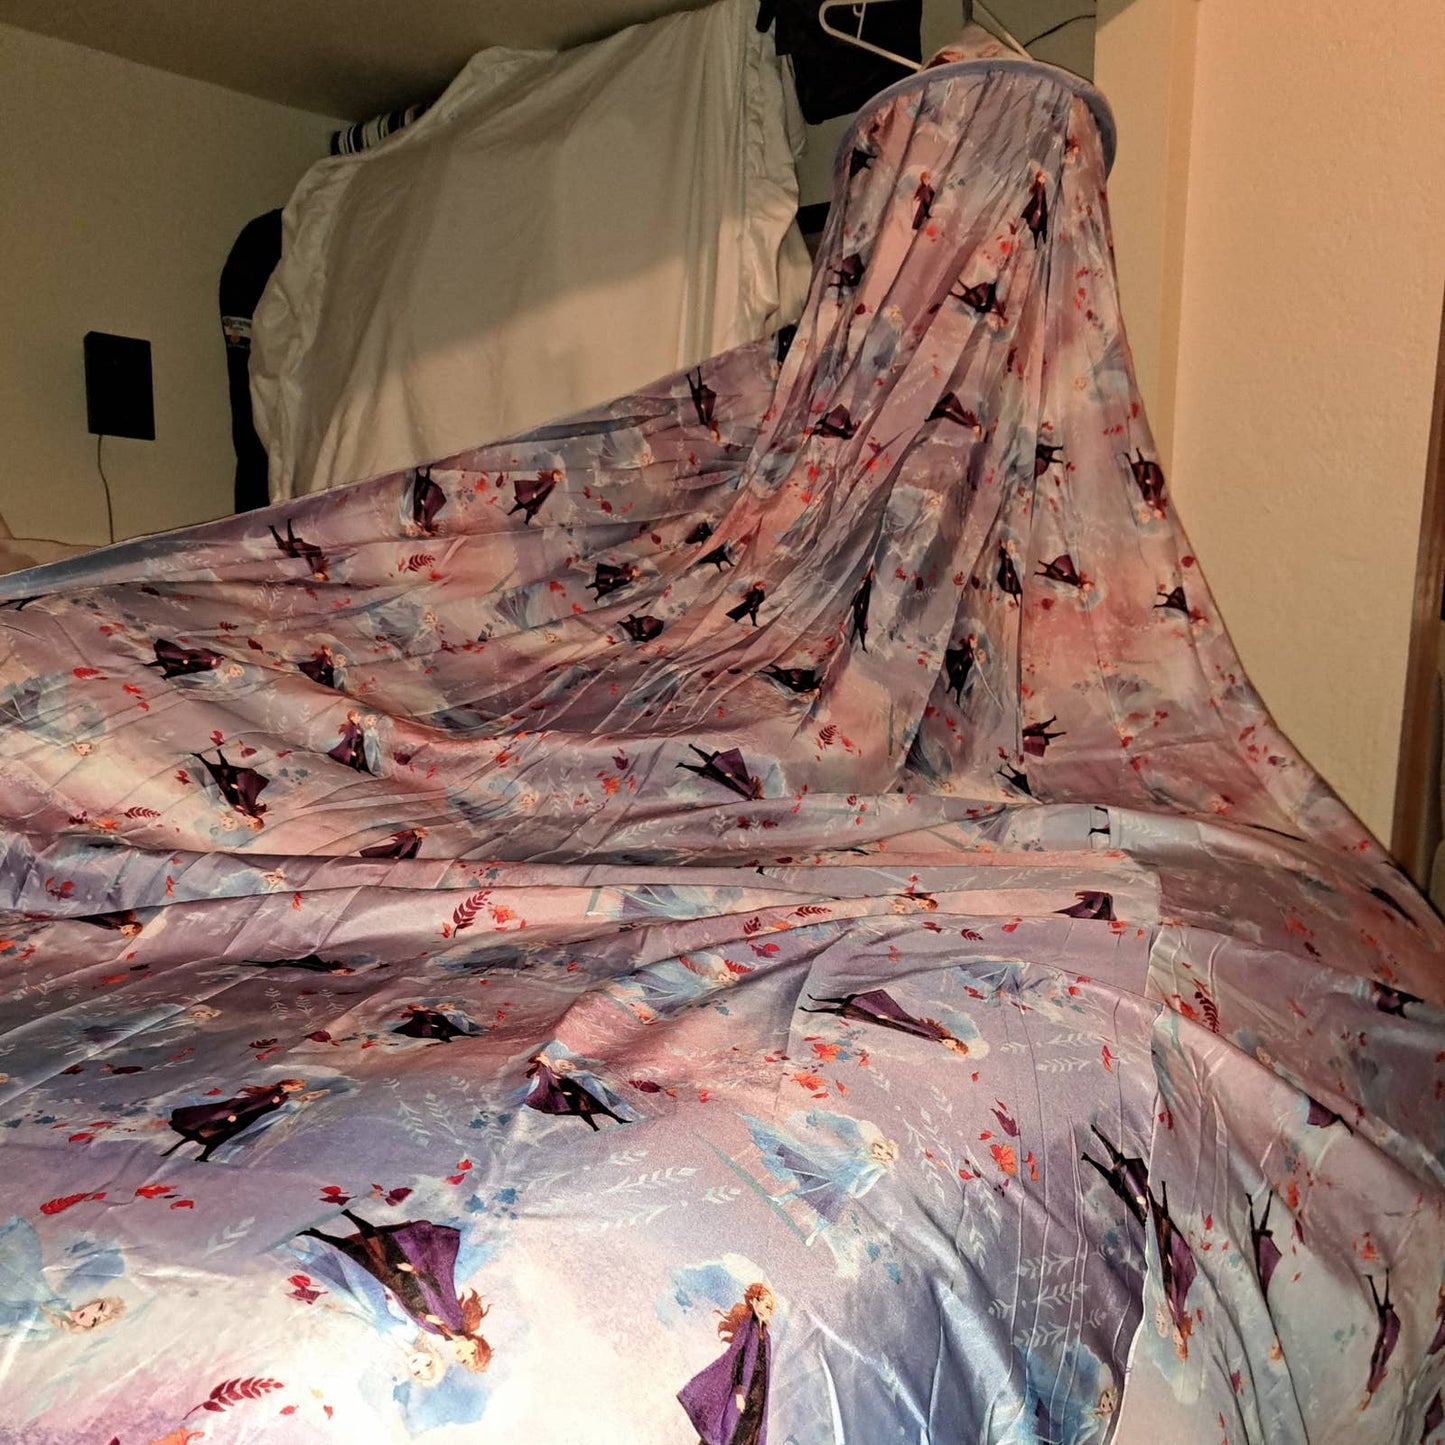 Frozen 2 Girls Bed Canopy Tent, Elsa & Anna, 100 in x 180 in